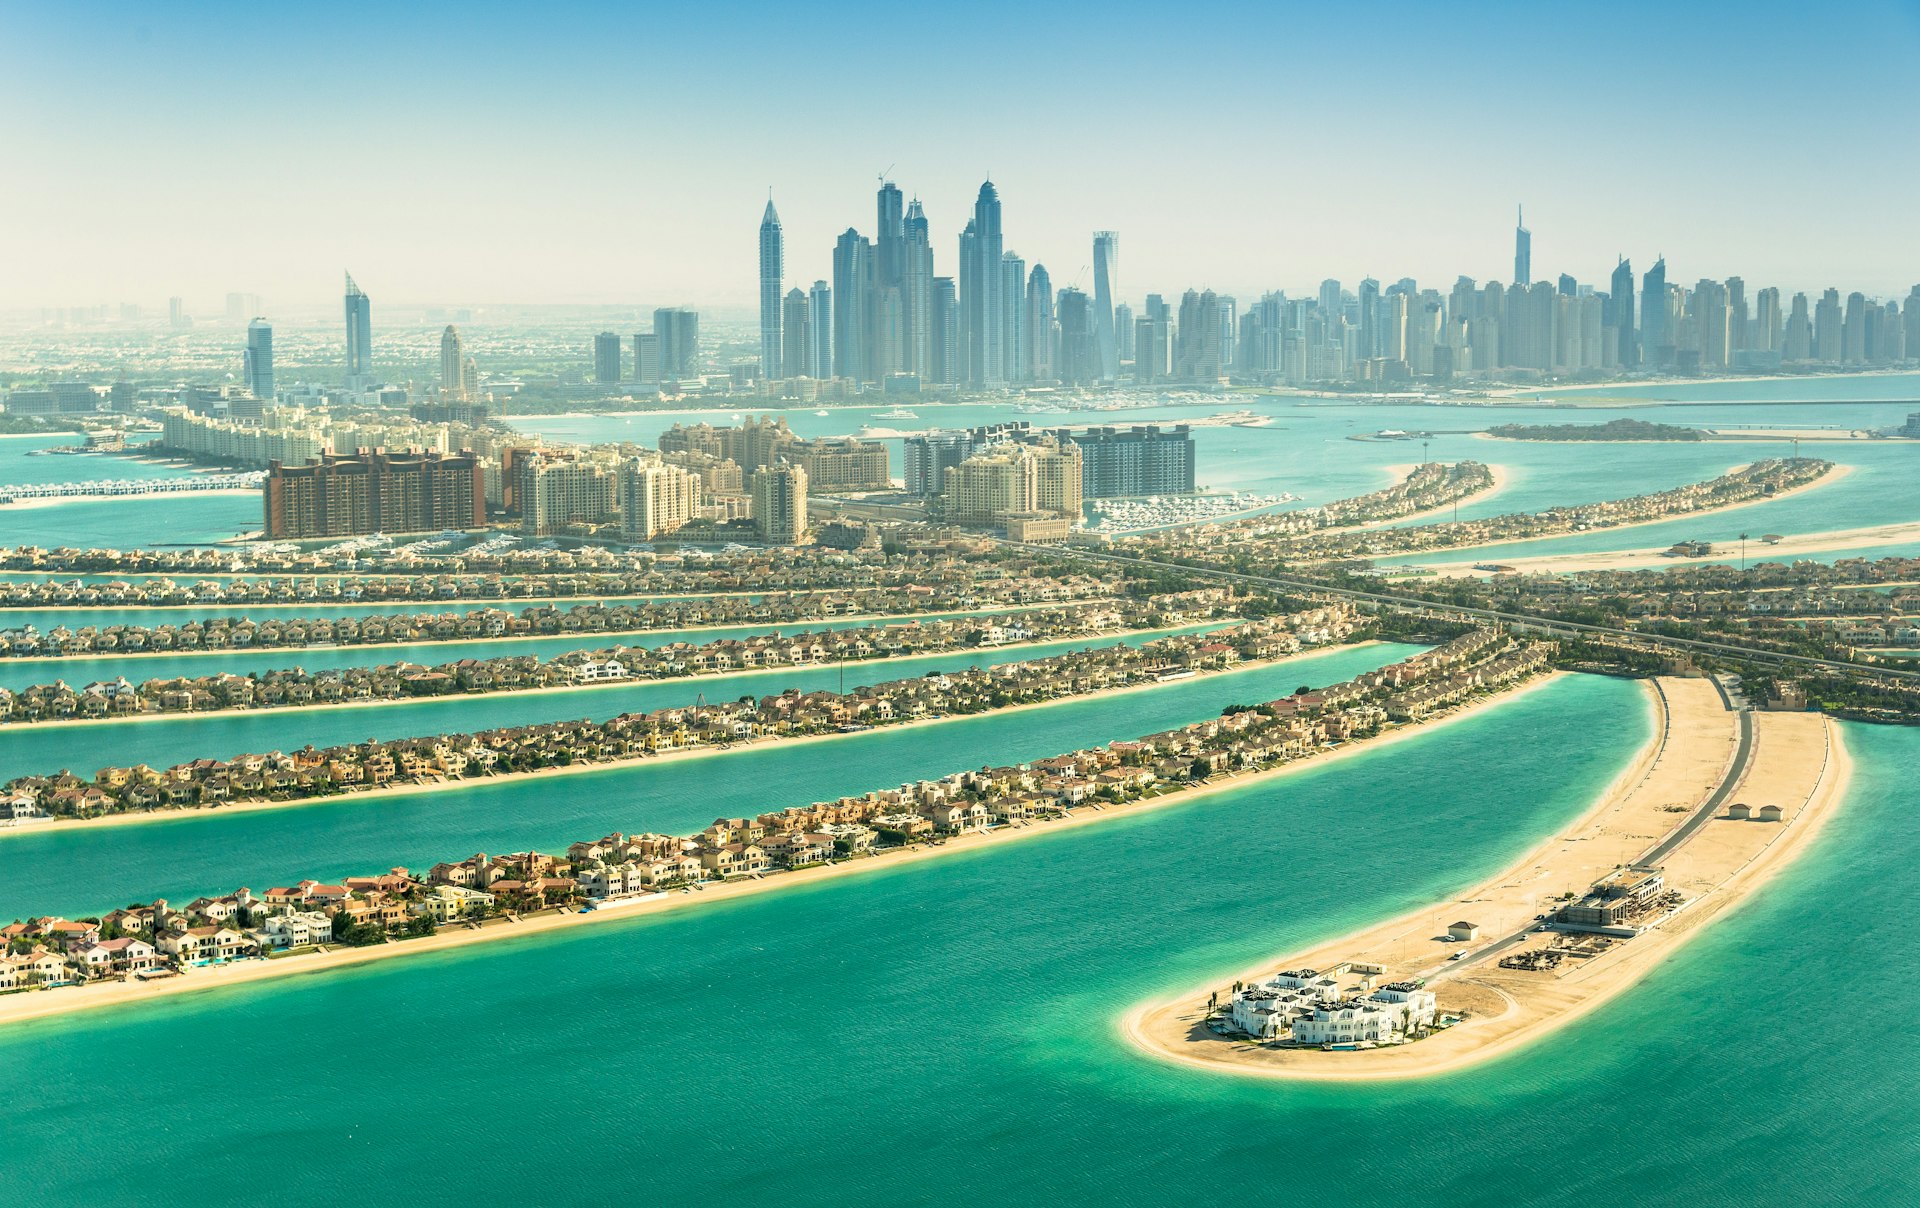 Aerial view of Palm Jumeirah in Dubai, United Arab Emirates